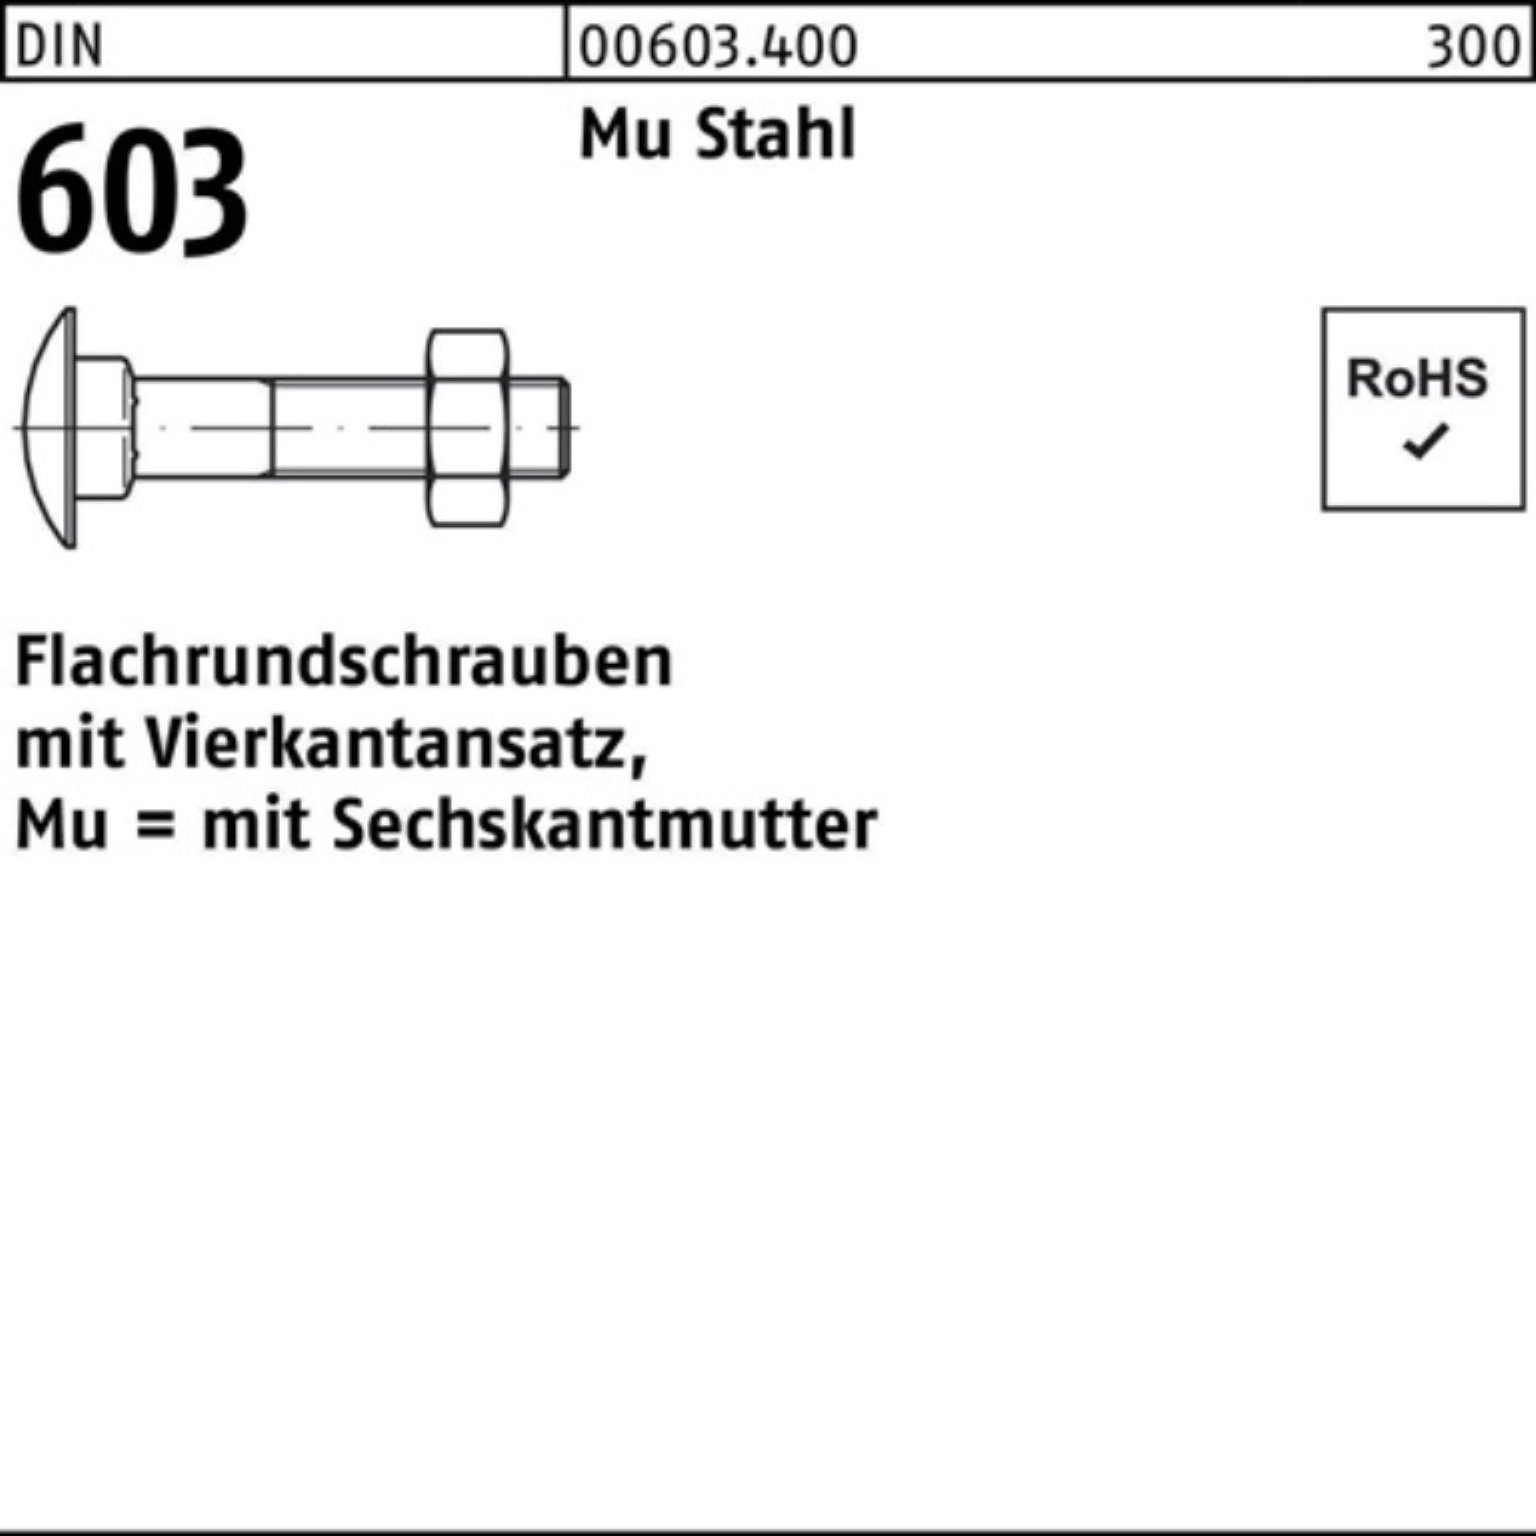 DIN Schraube Flachrundschraube 603 Pack 100er Vierkantansatz/6-ktmutter Reyher M20x240